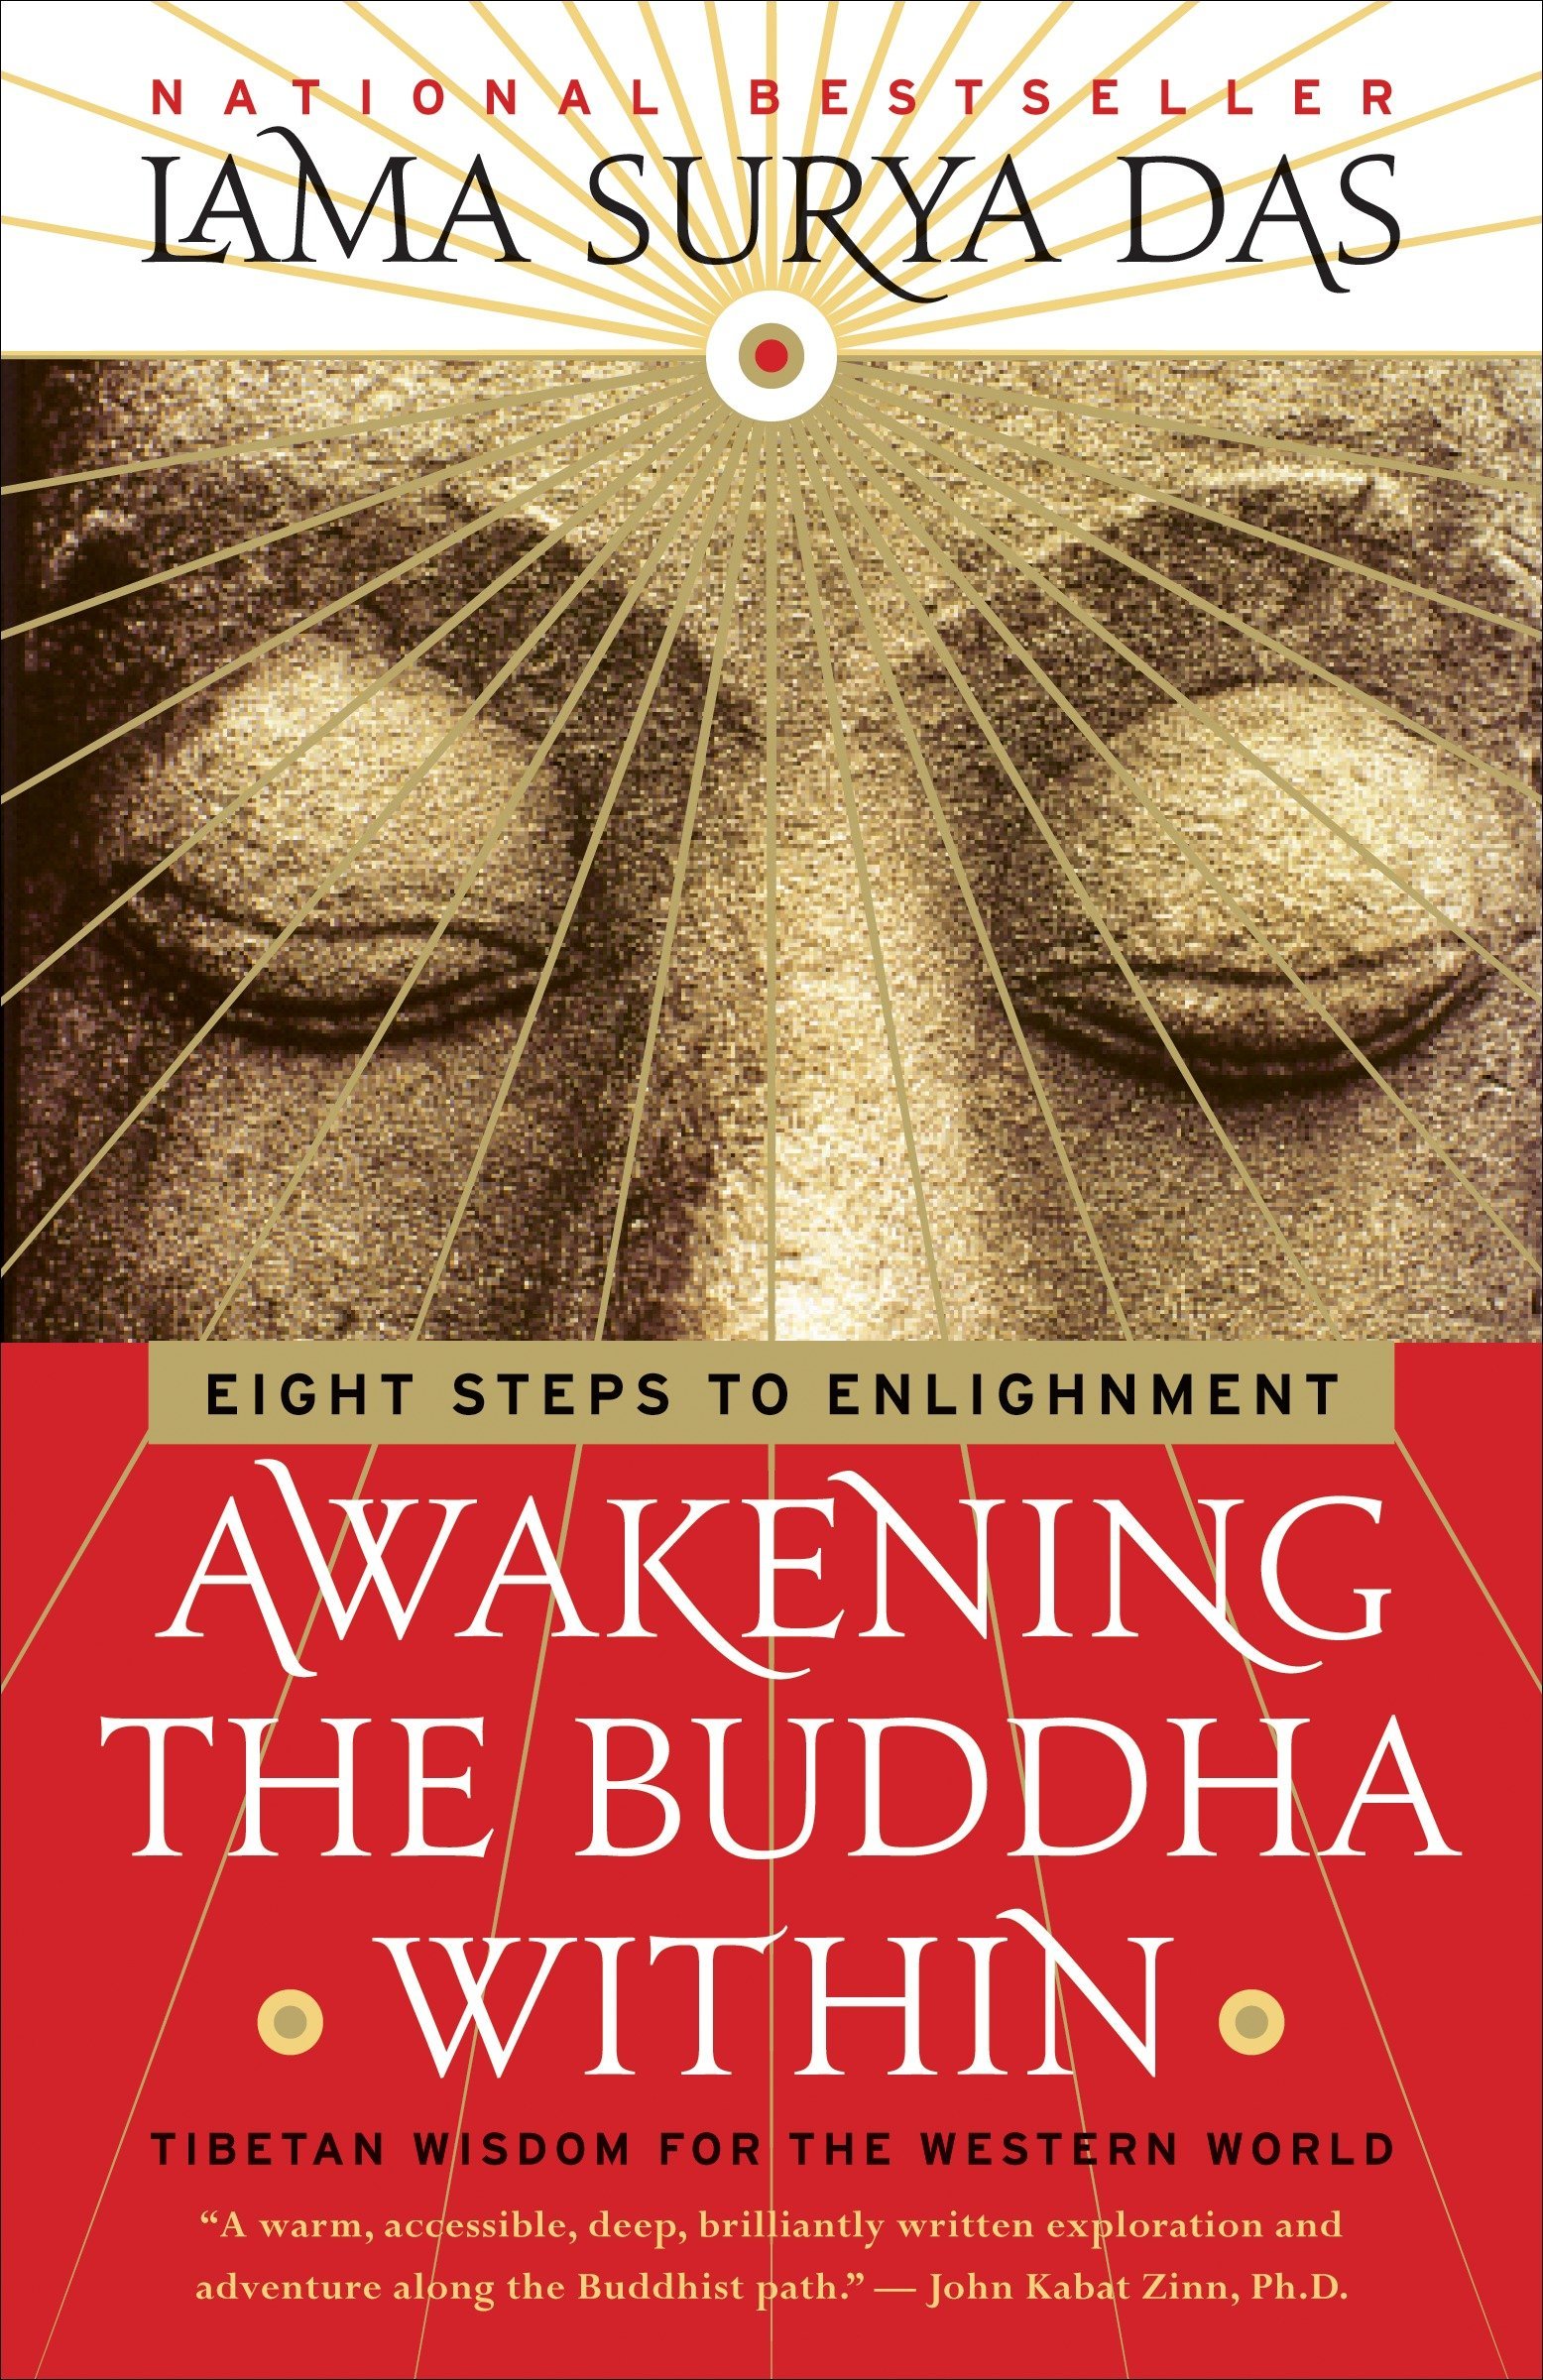 Awakening the Buddha Within by Lama Surya Das The Rabbit Hole